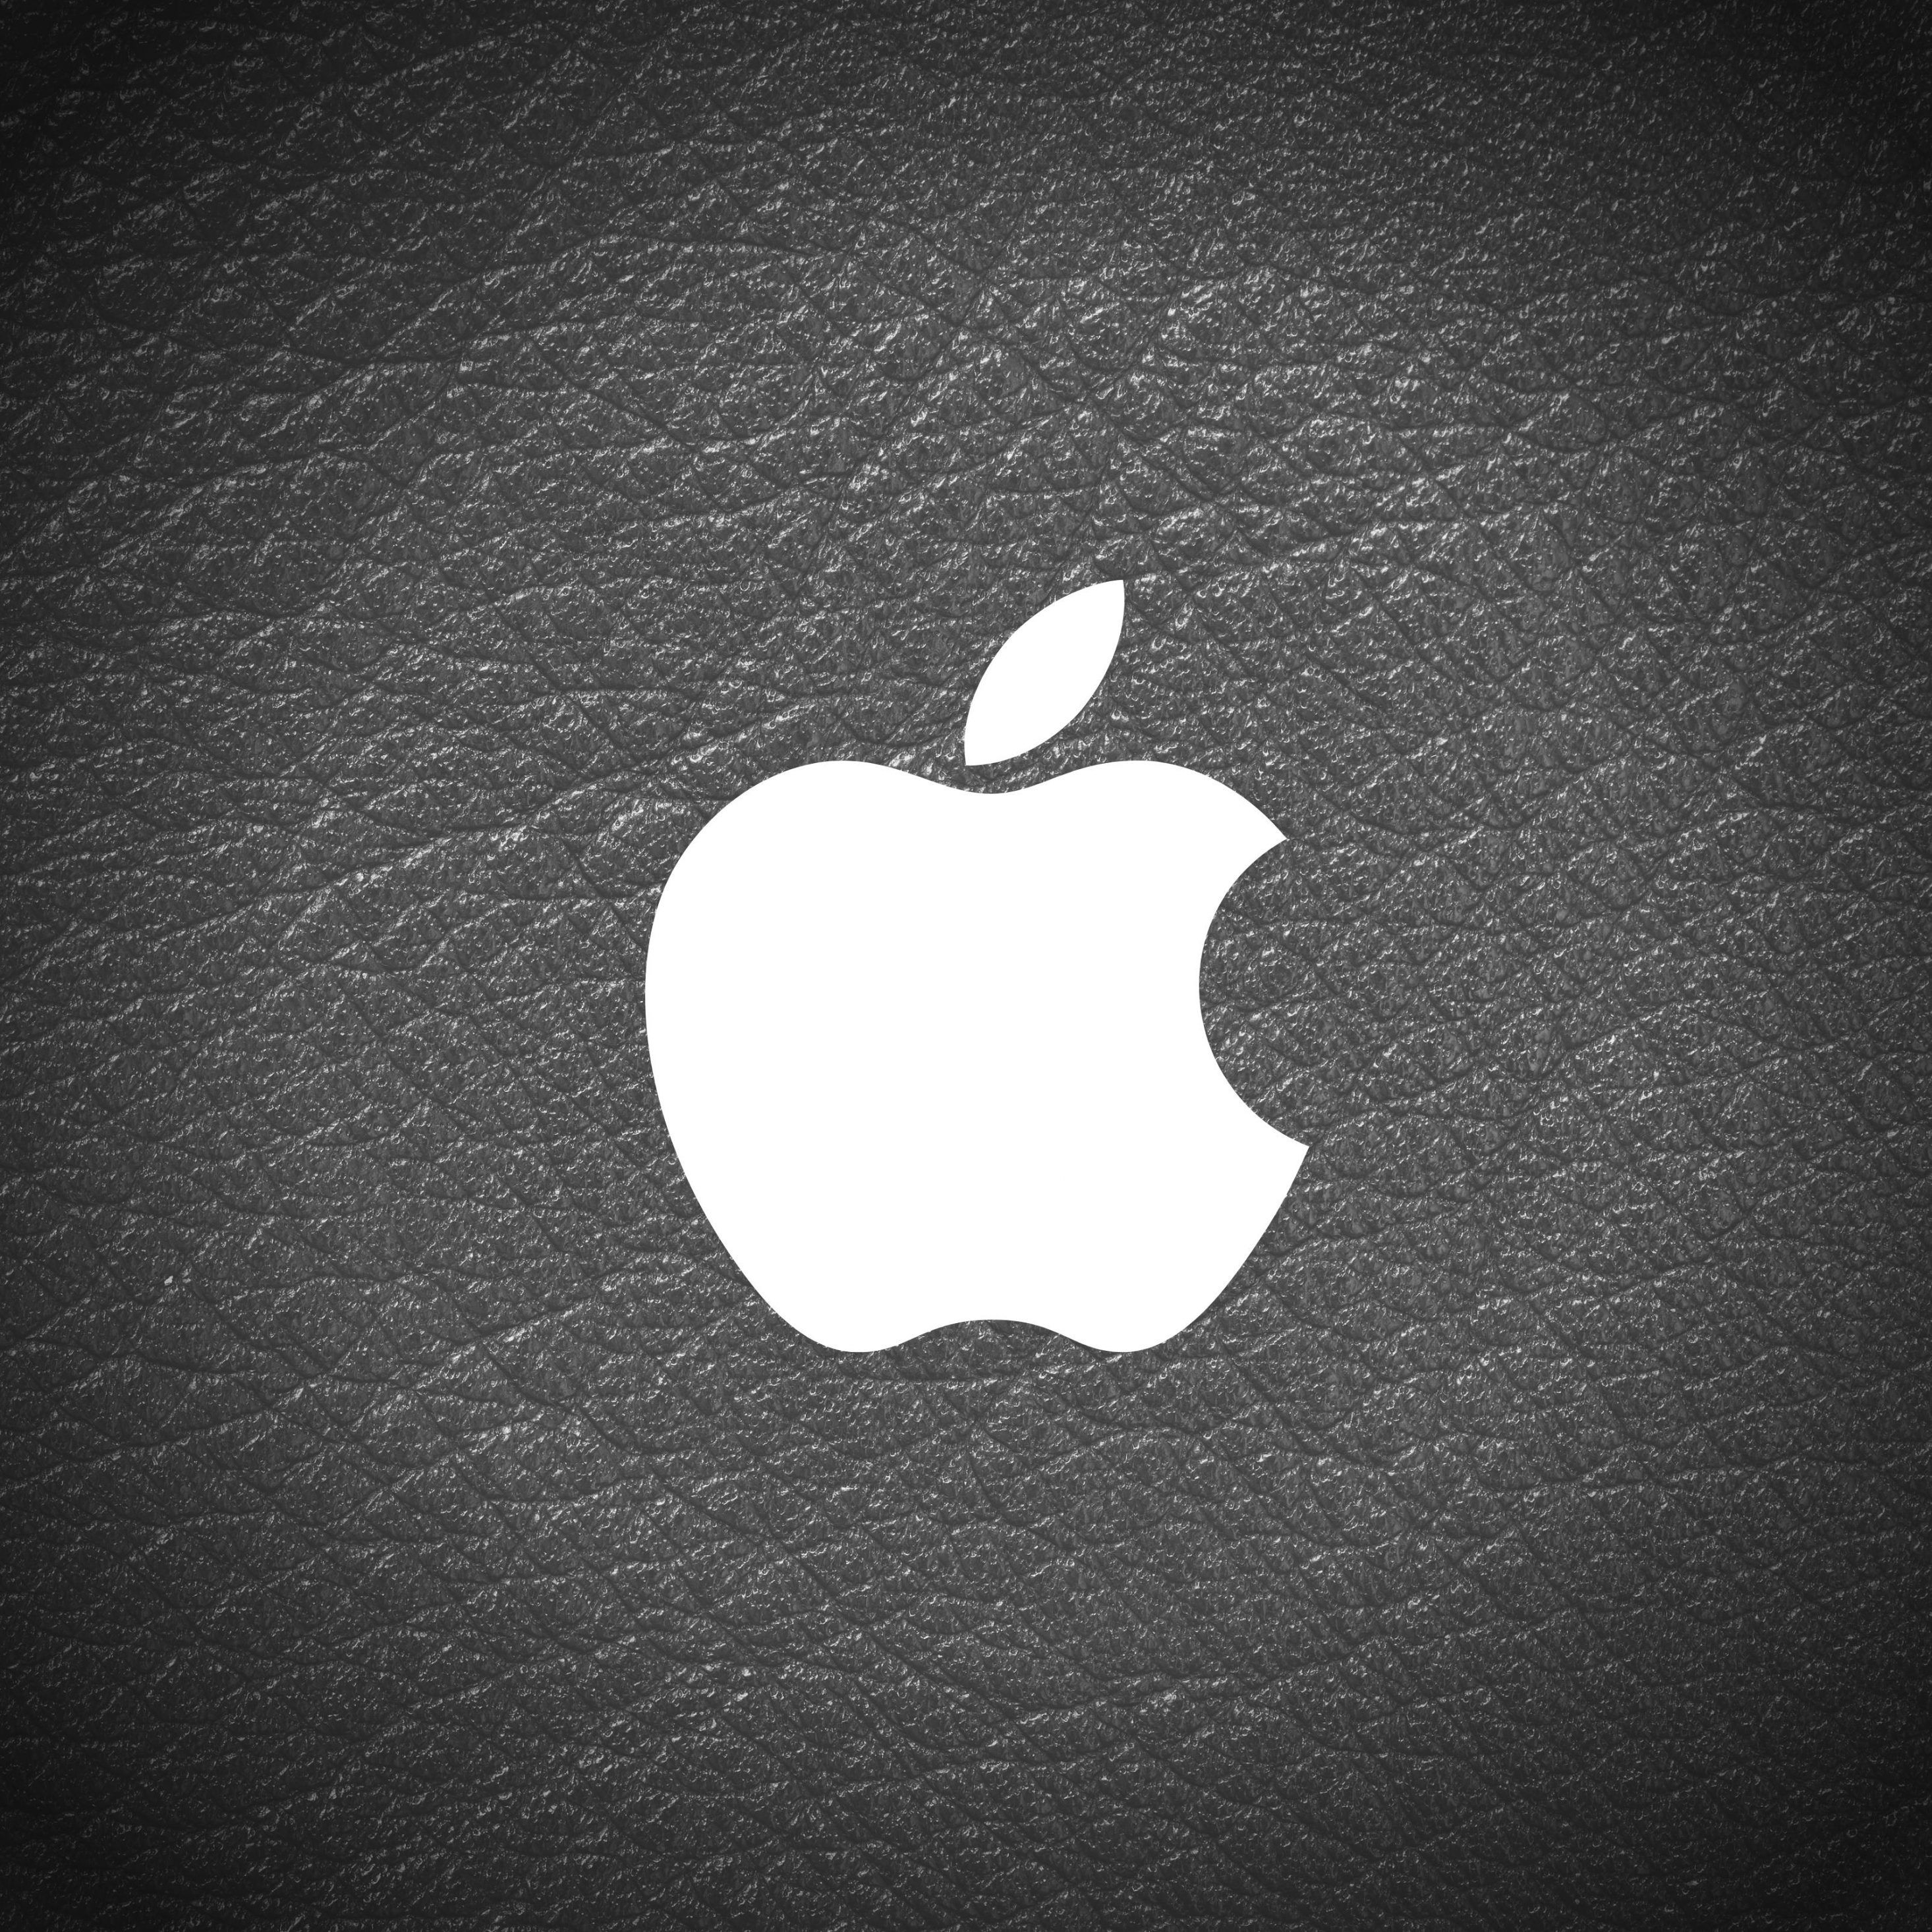 4K Apple Logo Wallpaper Logo Wallpaper 4k Download iPhone Wallpaper / Just apple logo, apple brand logo, design, logo apple